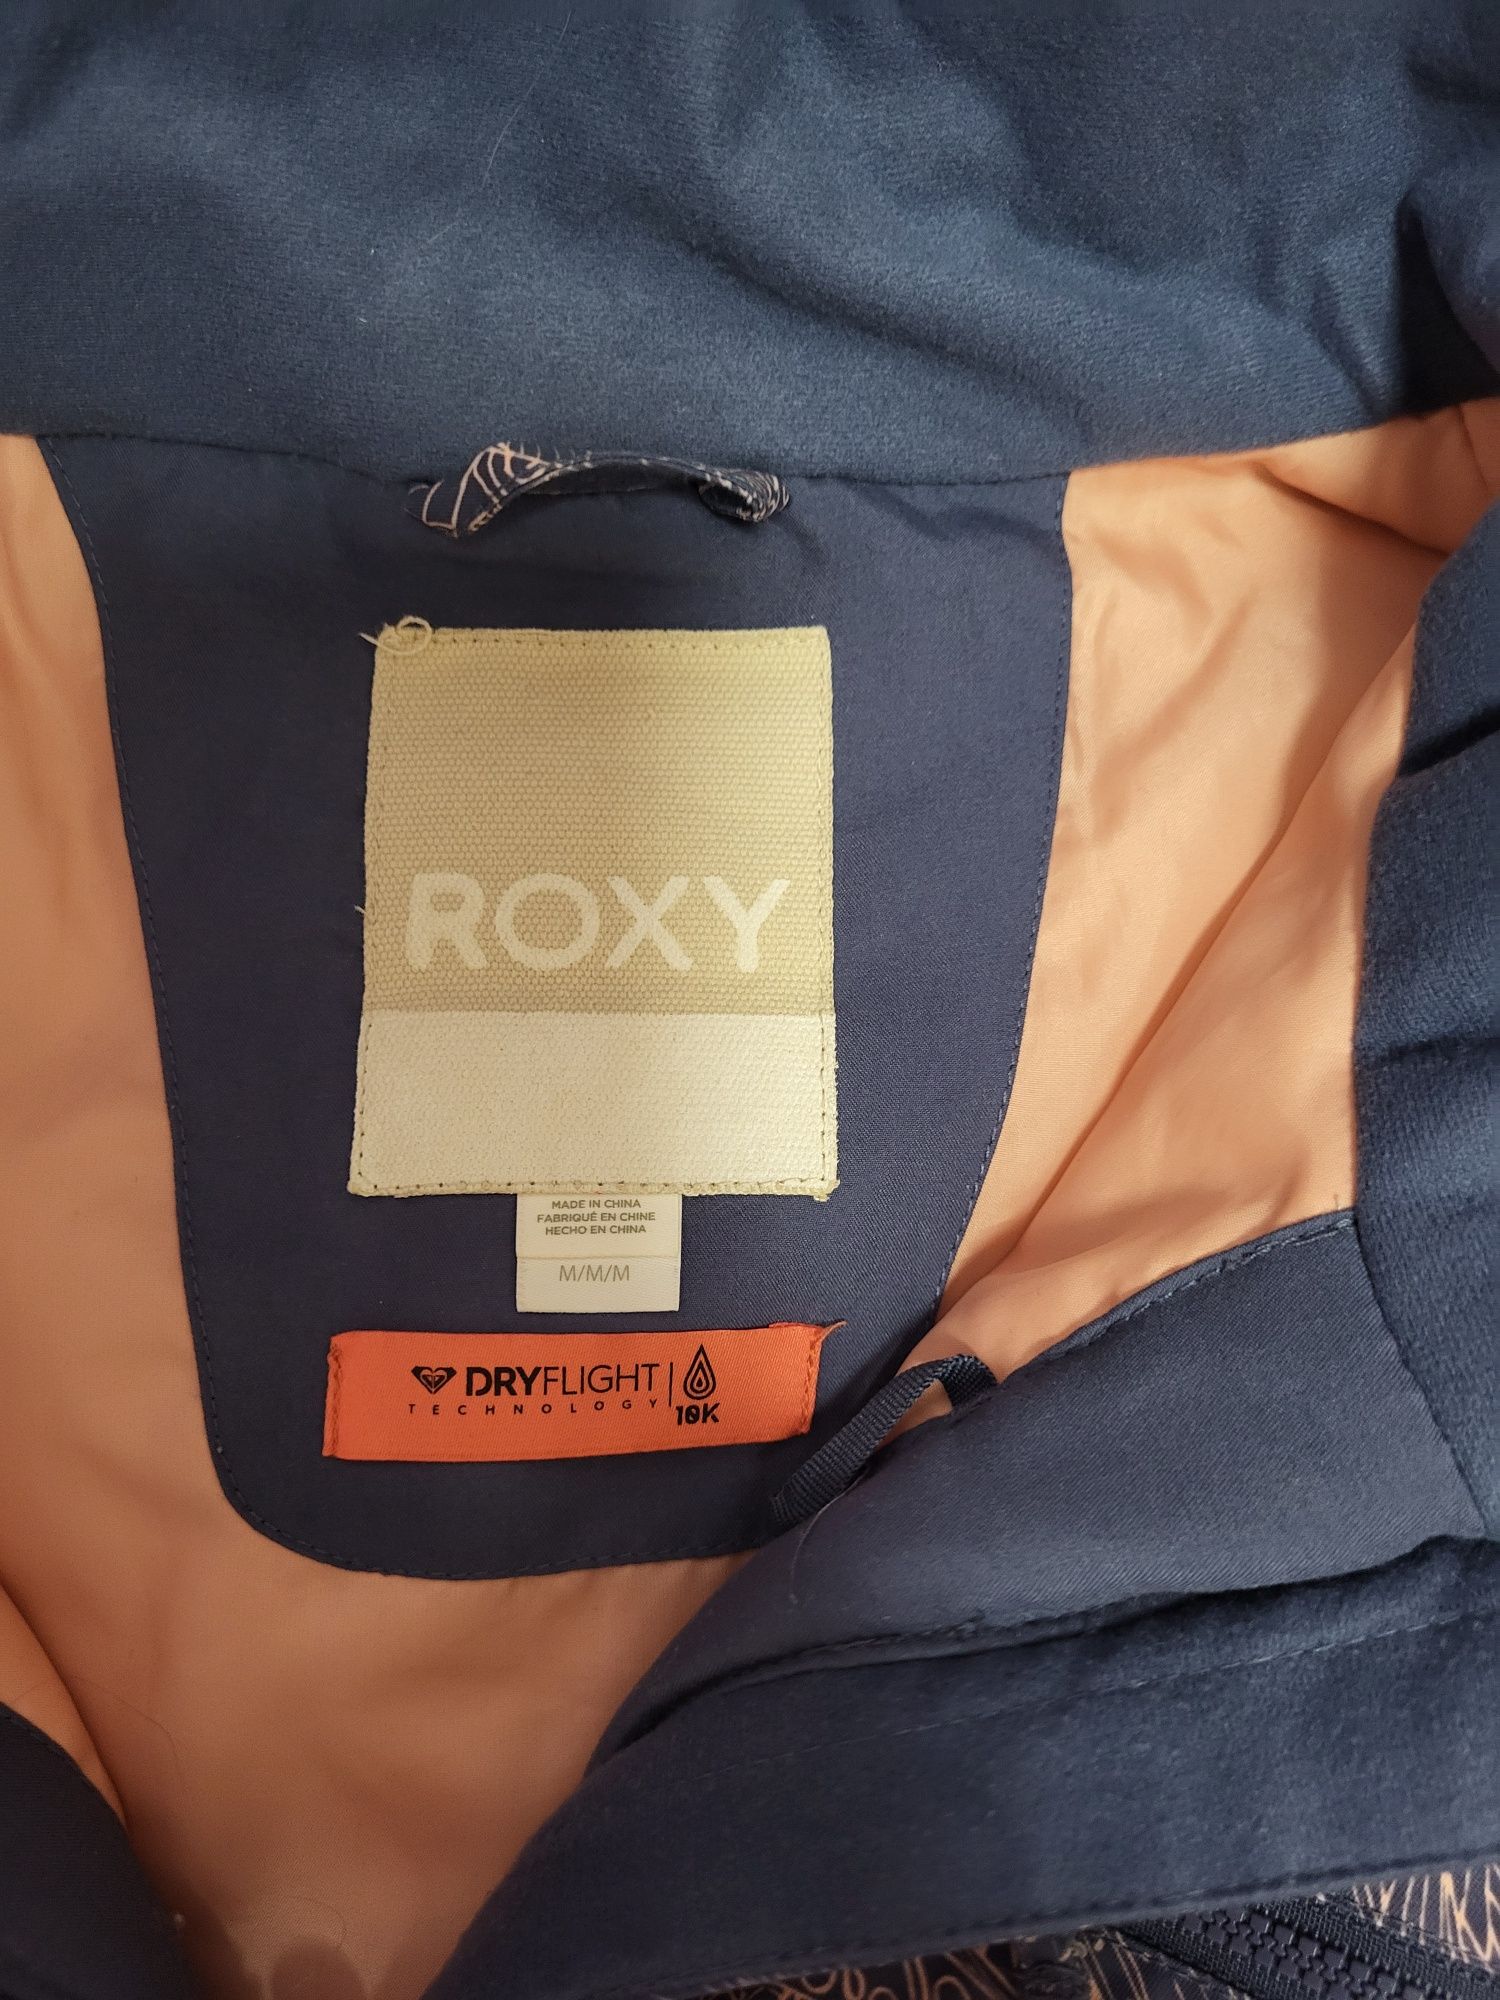 Roxy kurtka narciarska damska lekka,  z membraną 10k